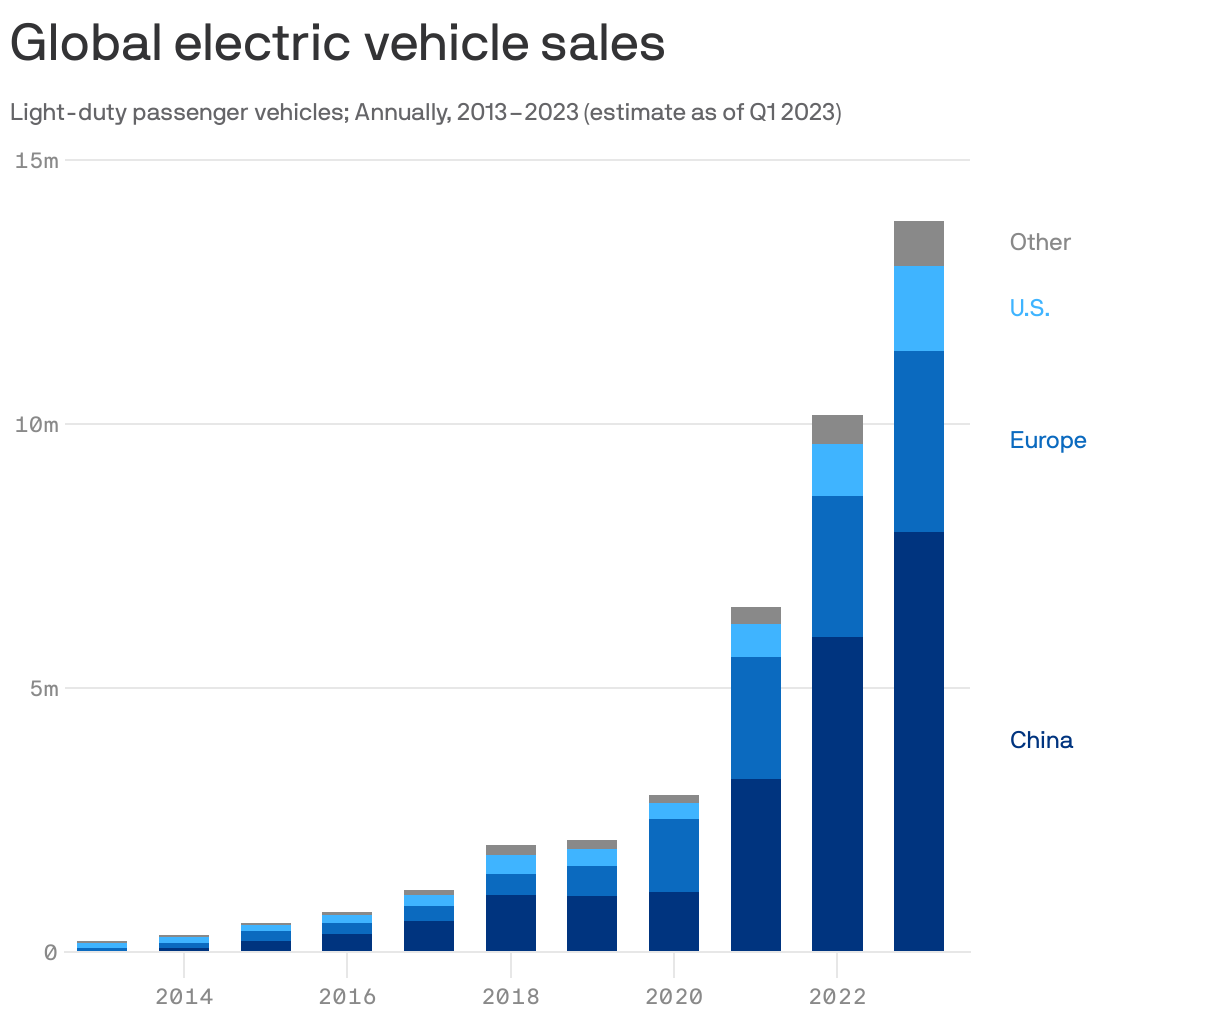 Global electric vehicle sales